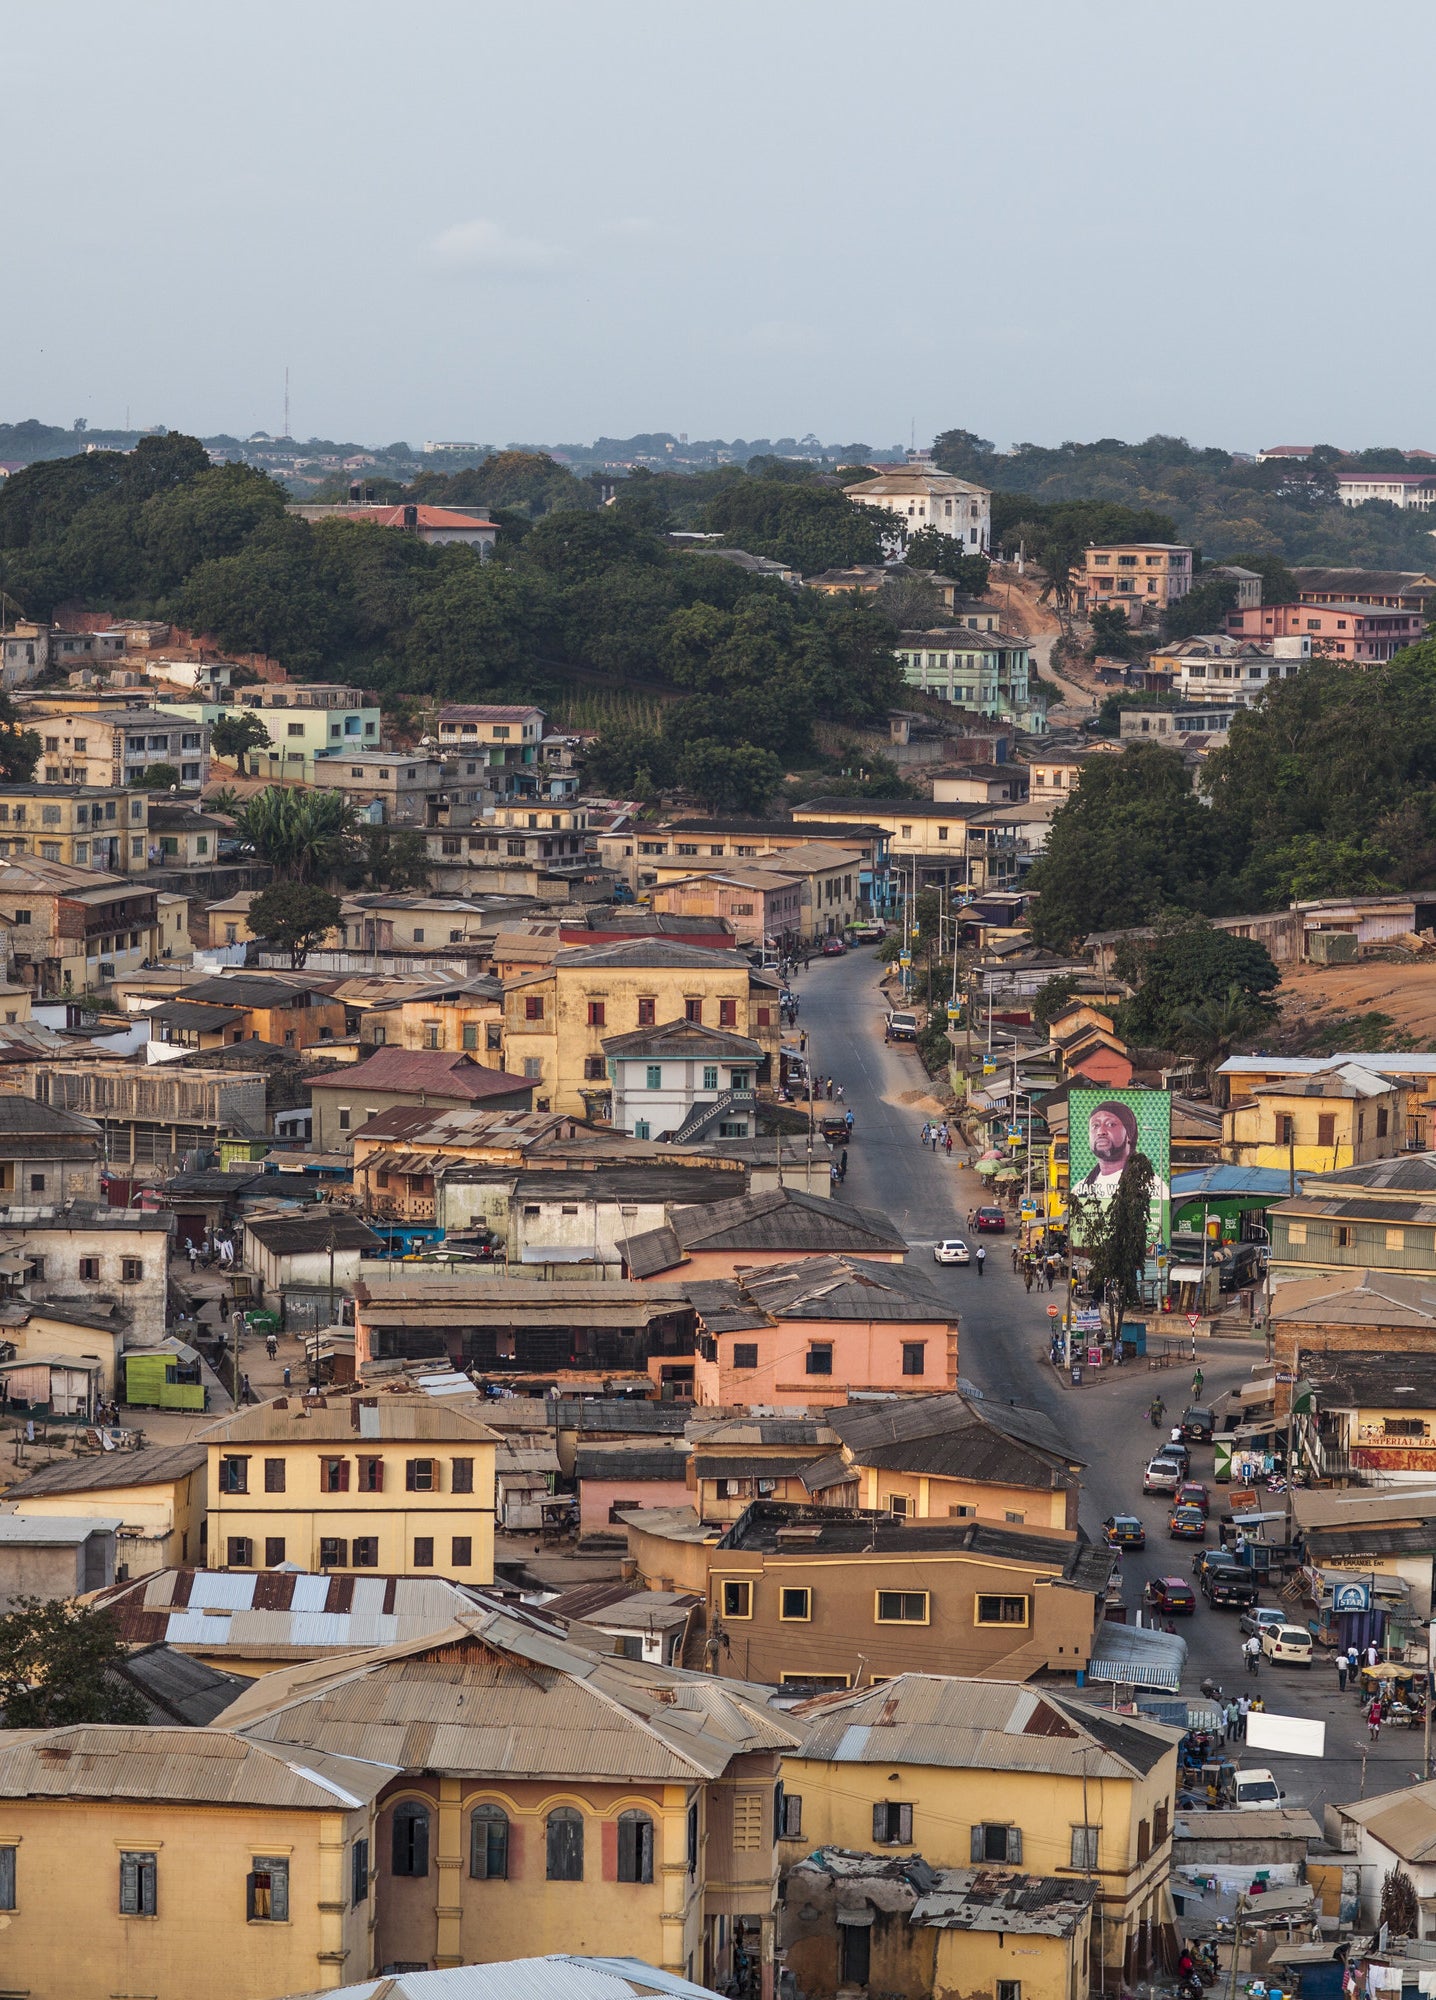 Ashanti Street in Ghana